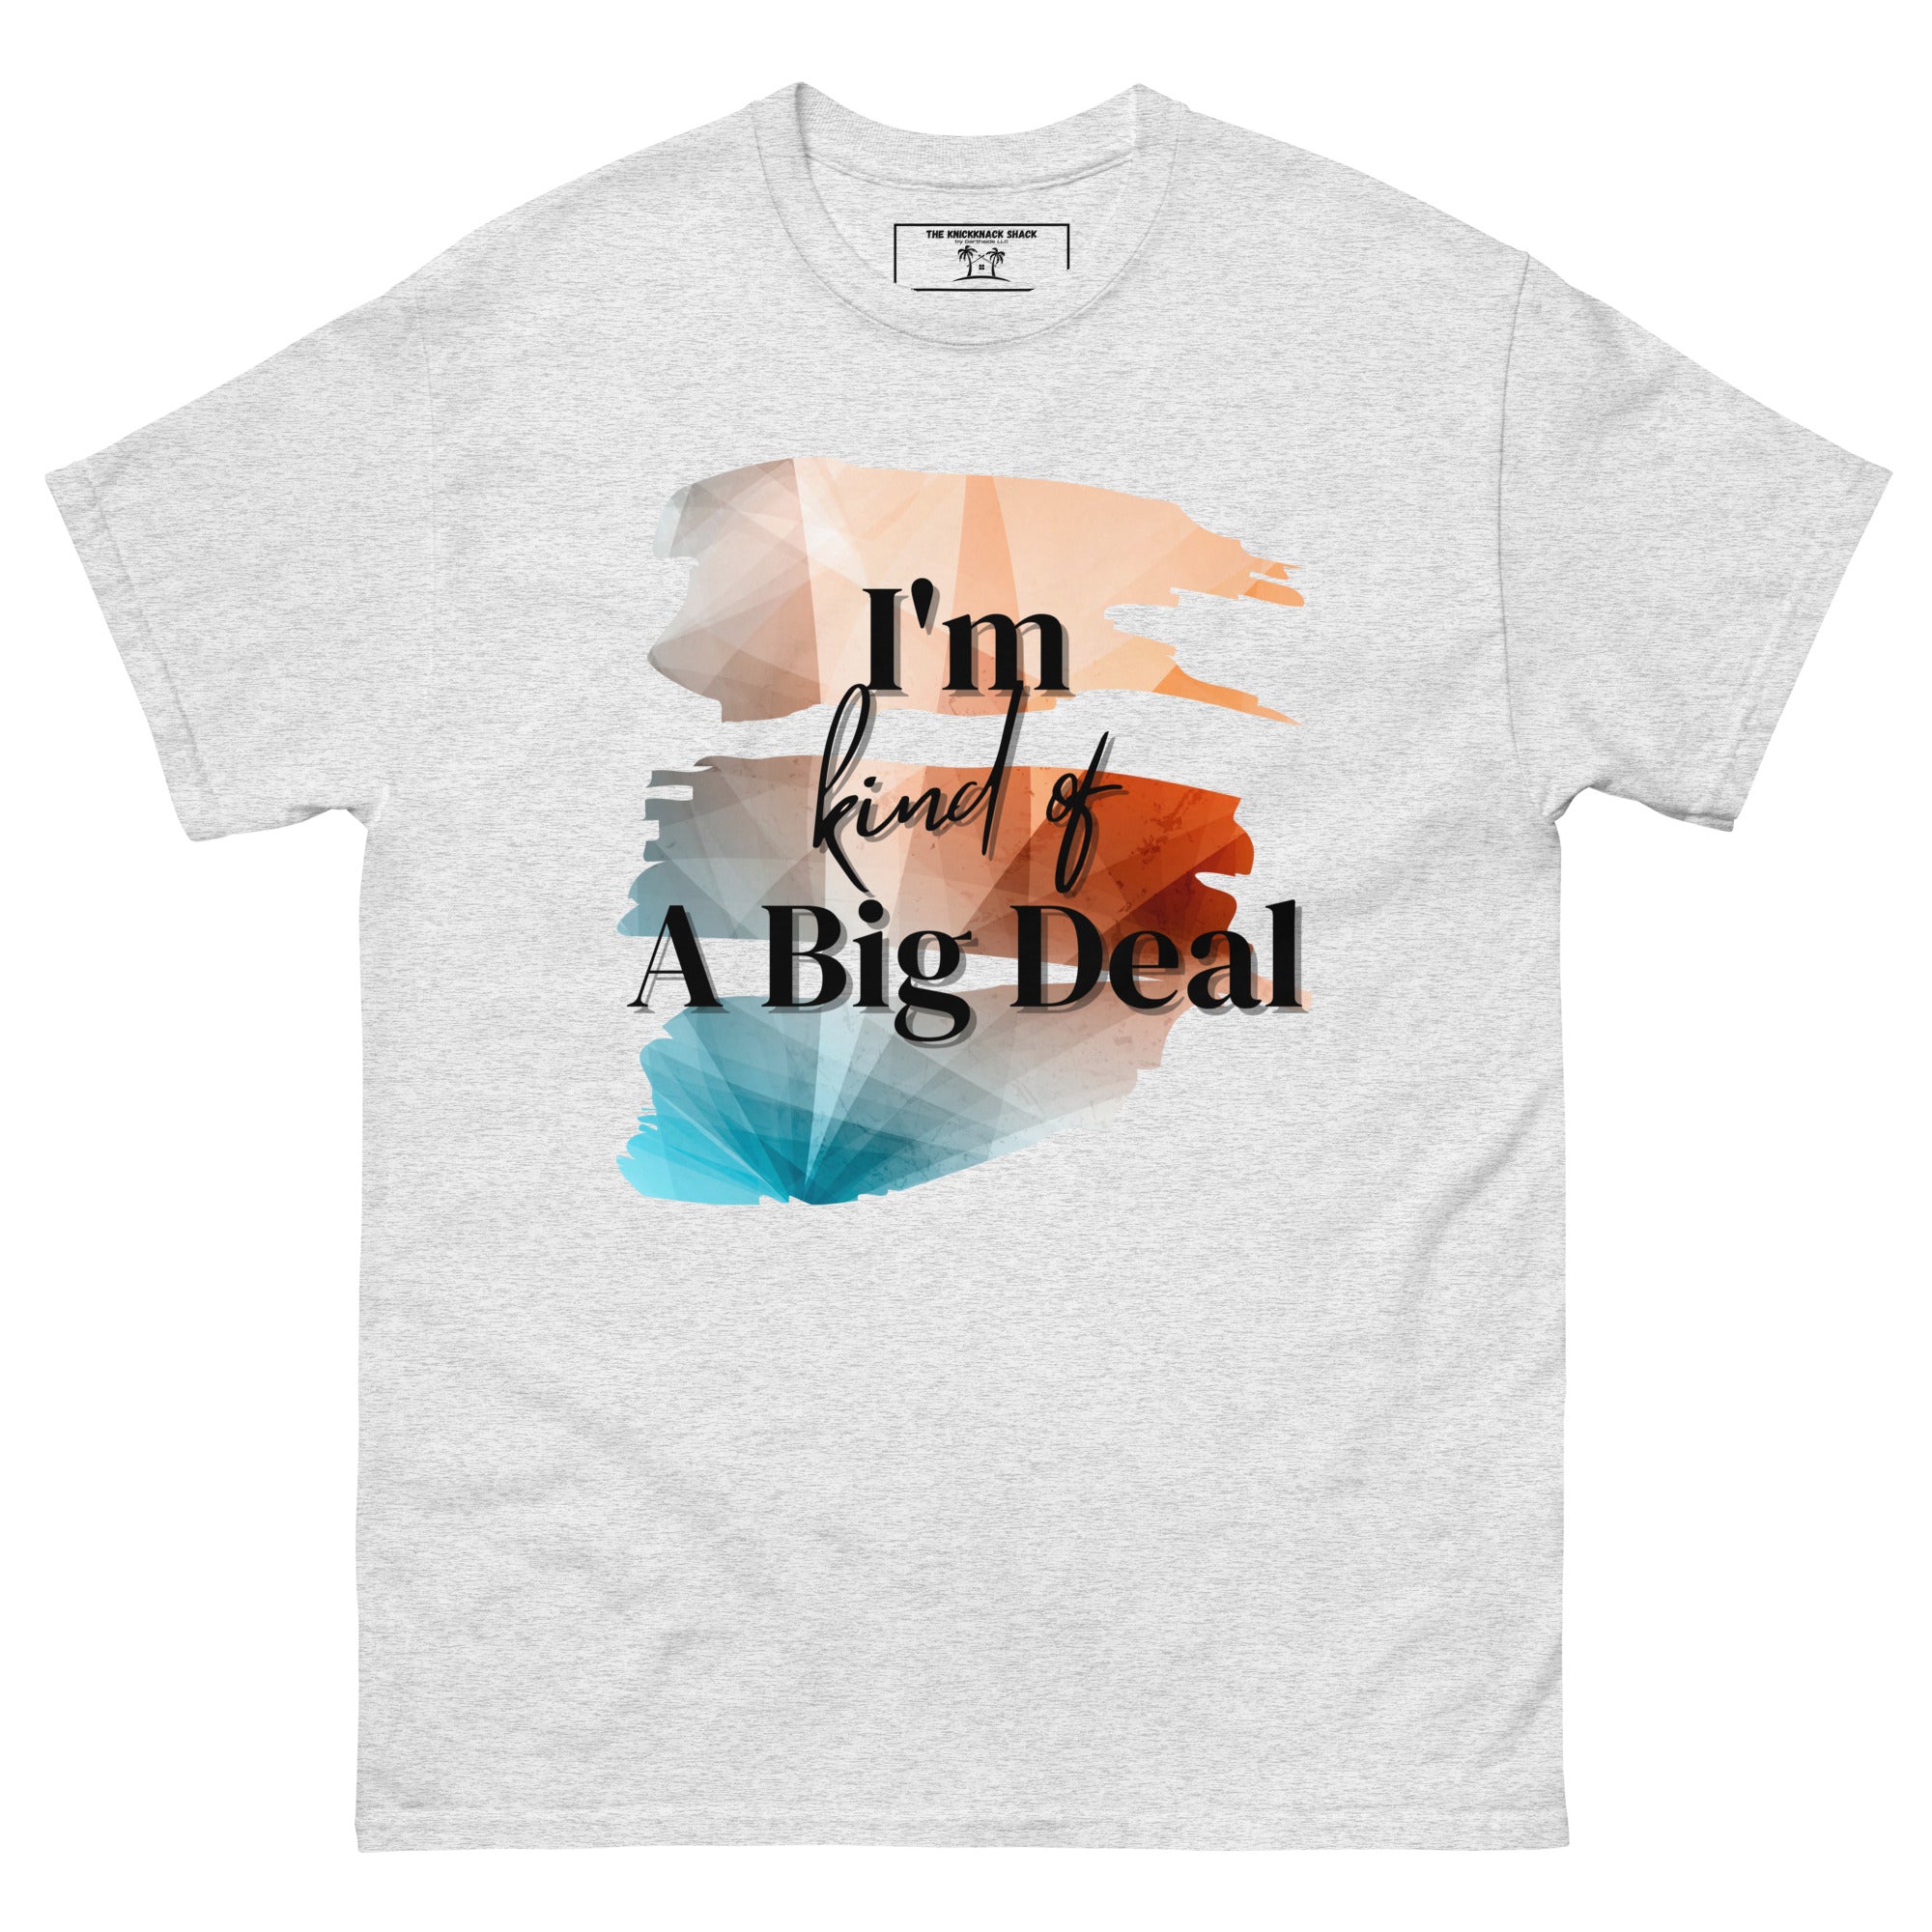 Camiseta clásica - Big Deal (colores claros)